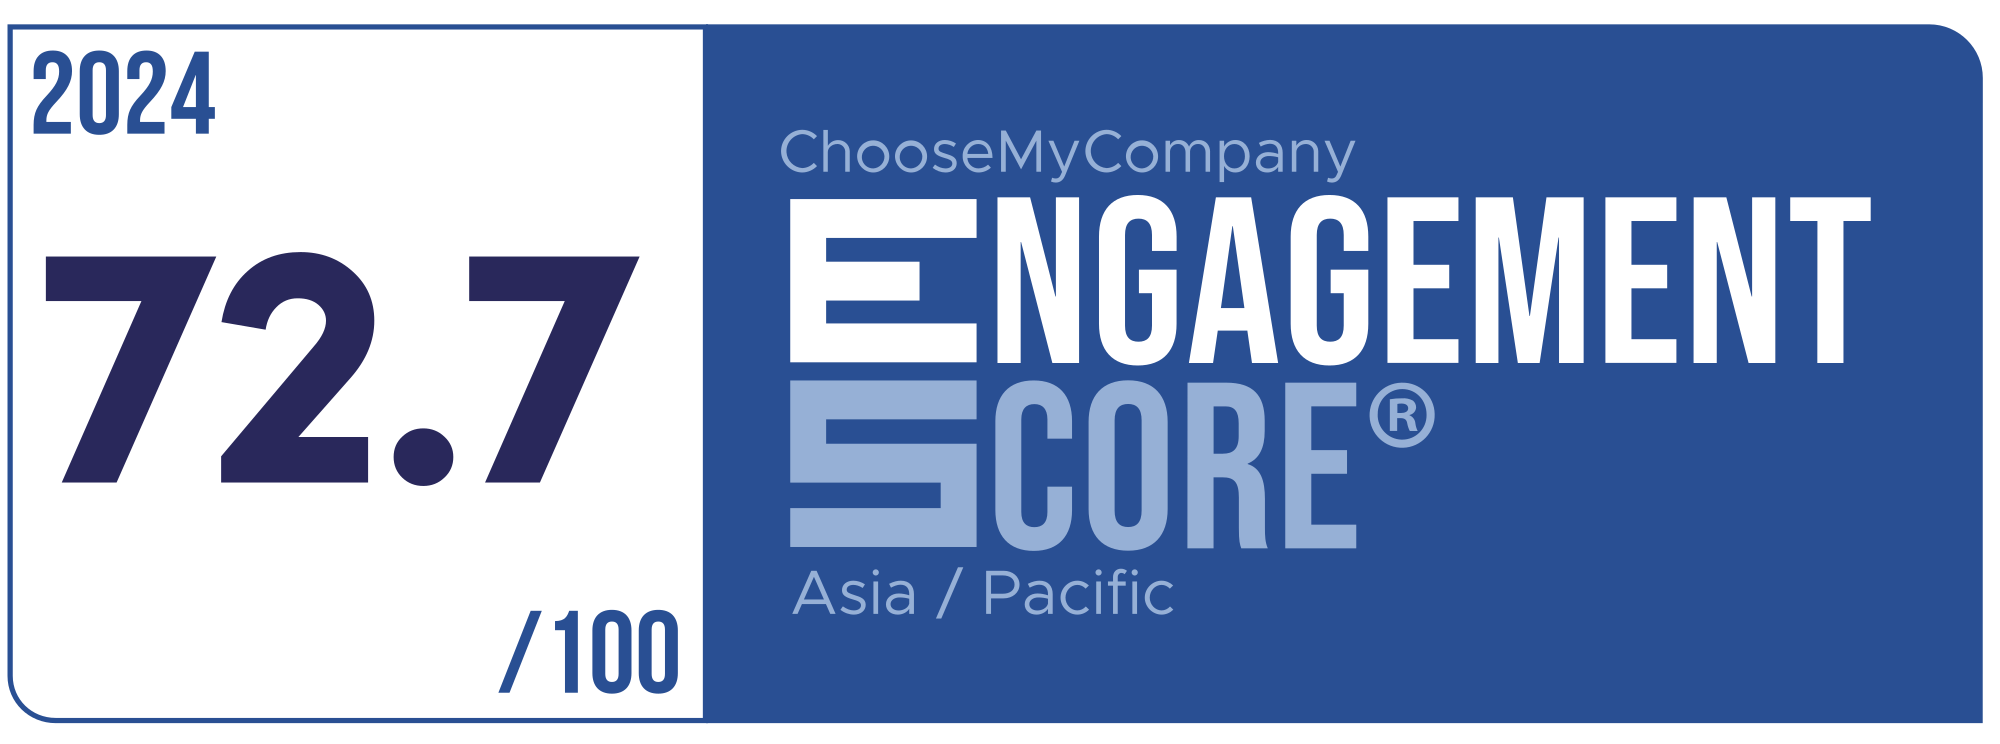 Label Engagement Score 2024 Asia / Pacific